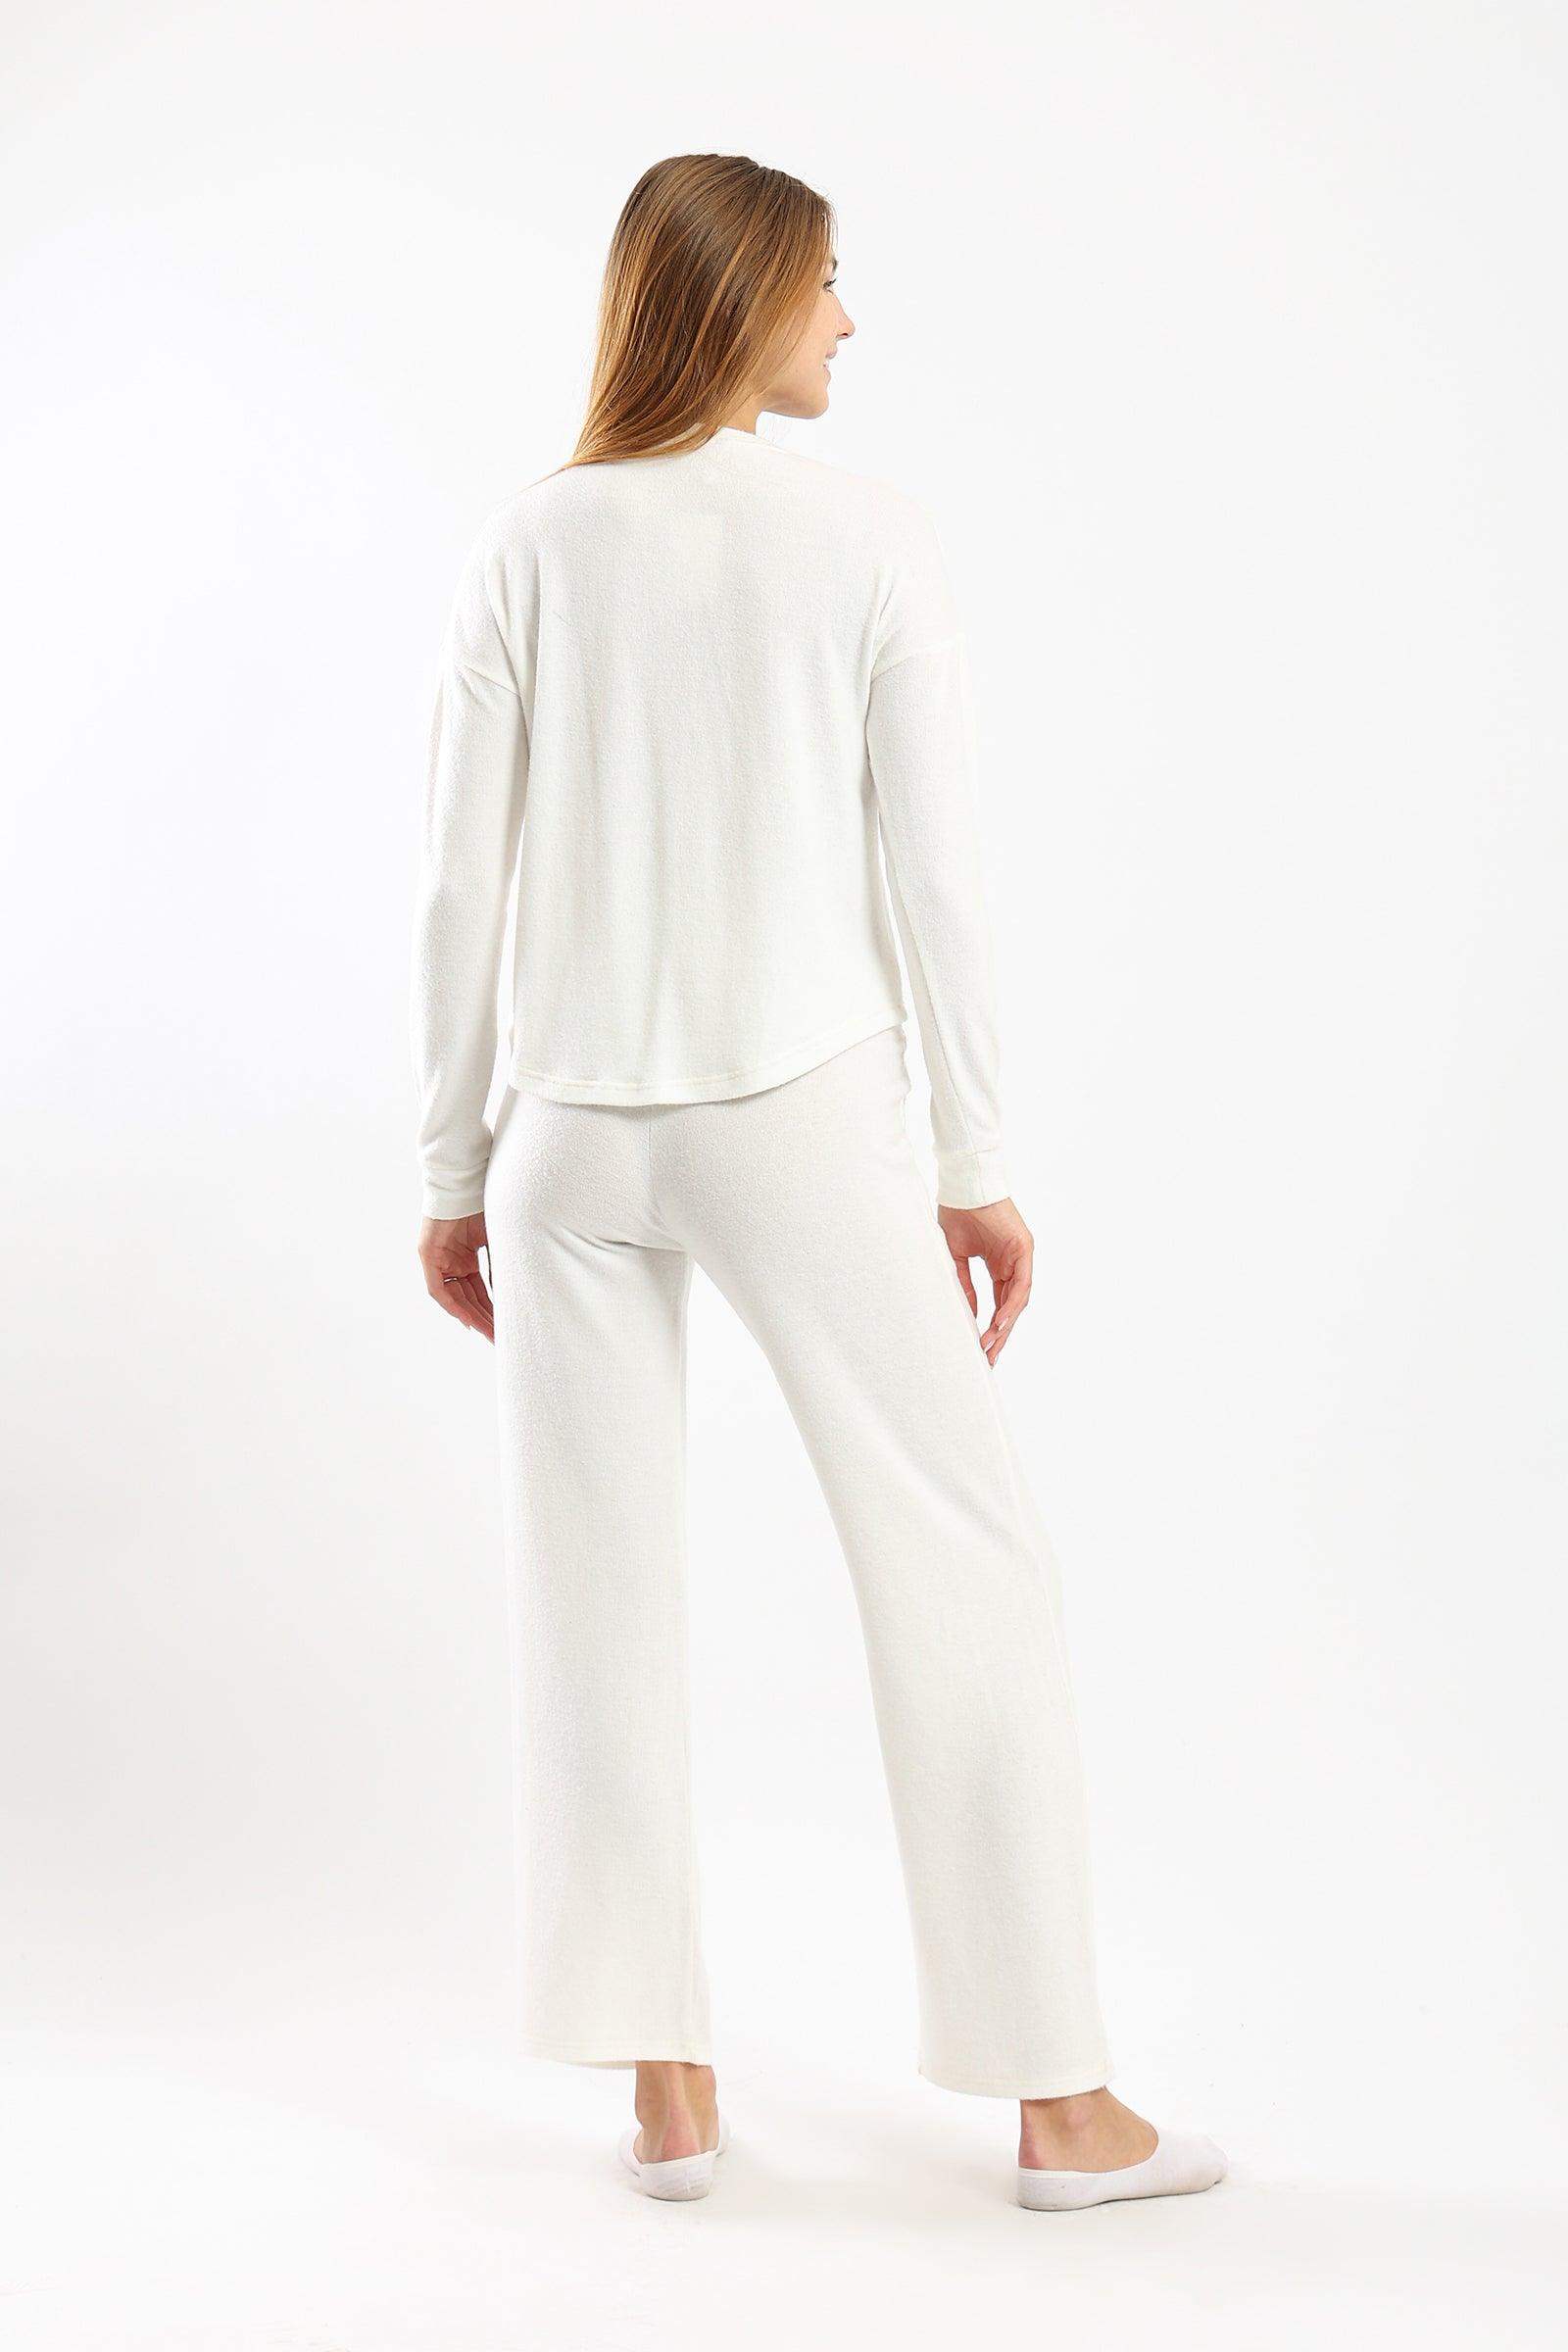 Off White Printed Pyjama Set - Carina - كارينا